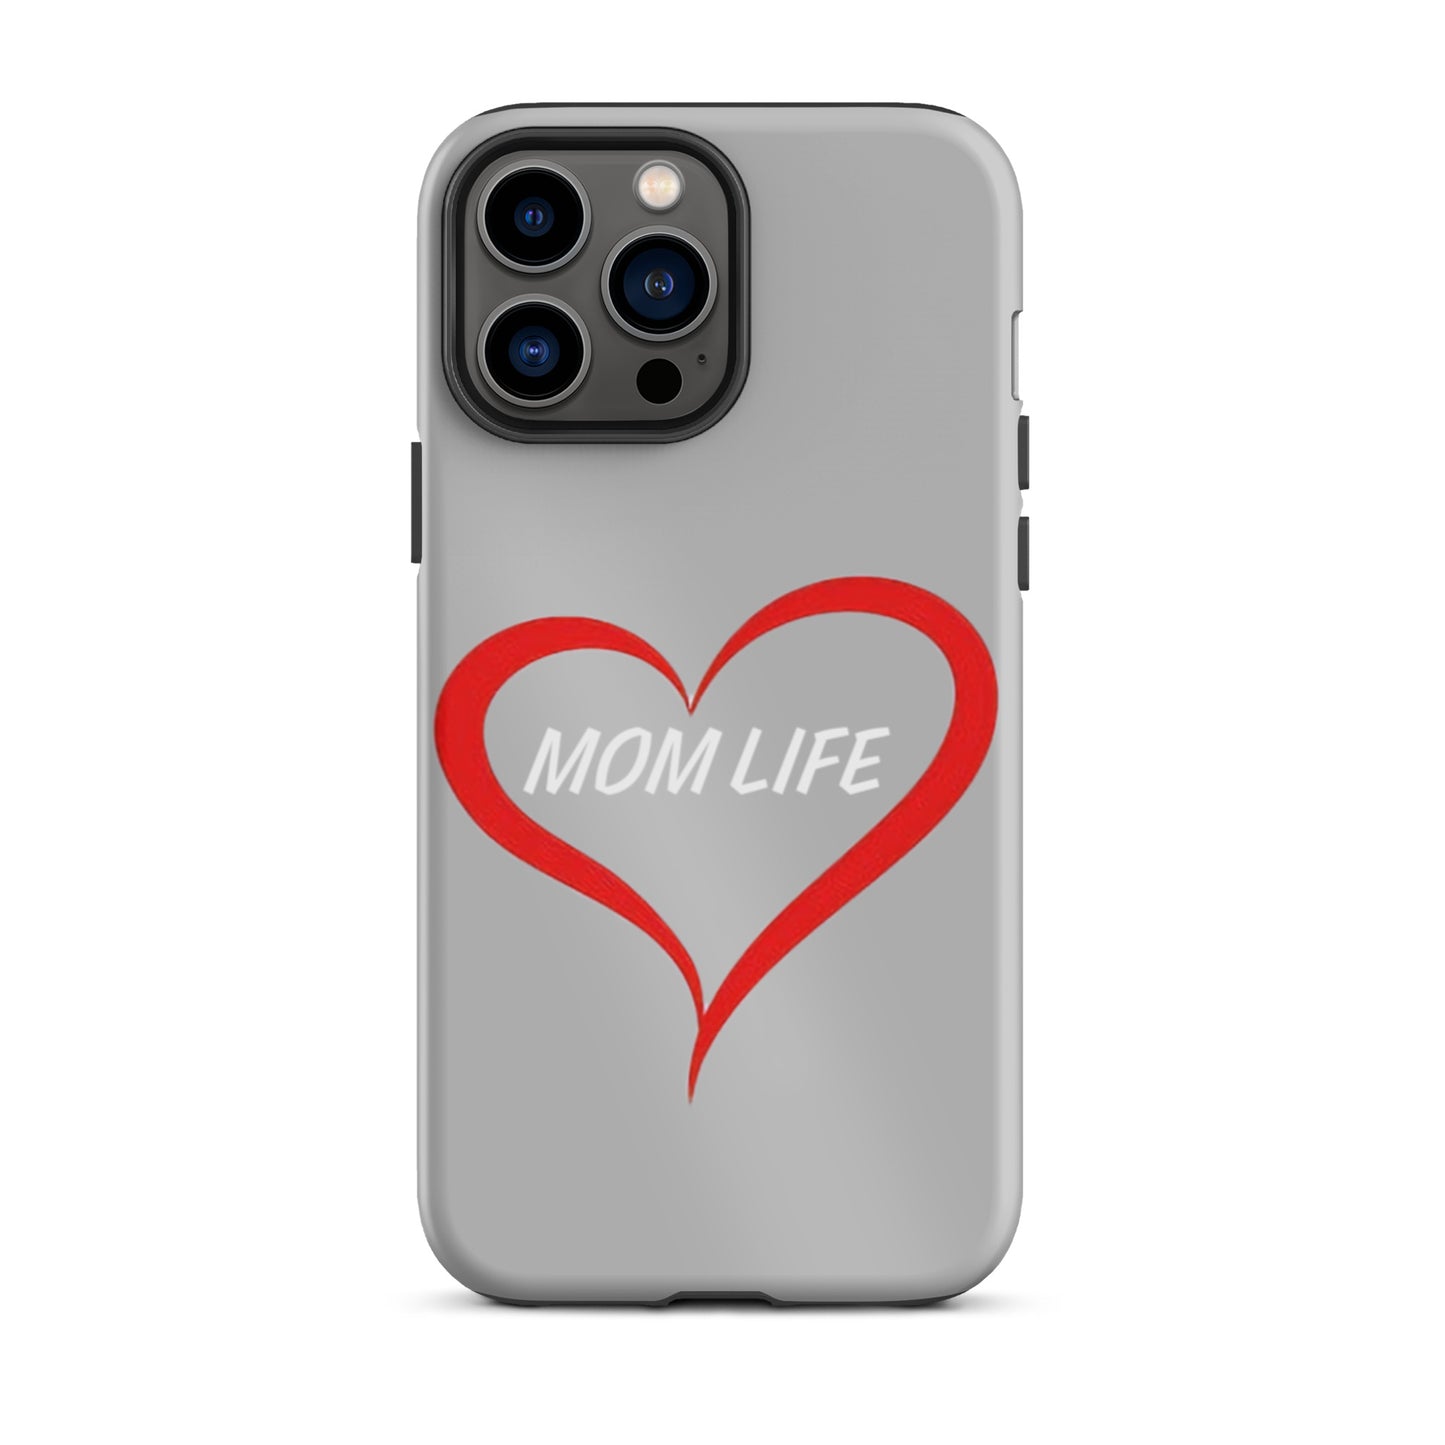 Mom Life iPhone case